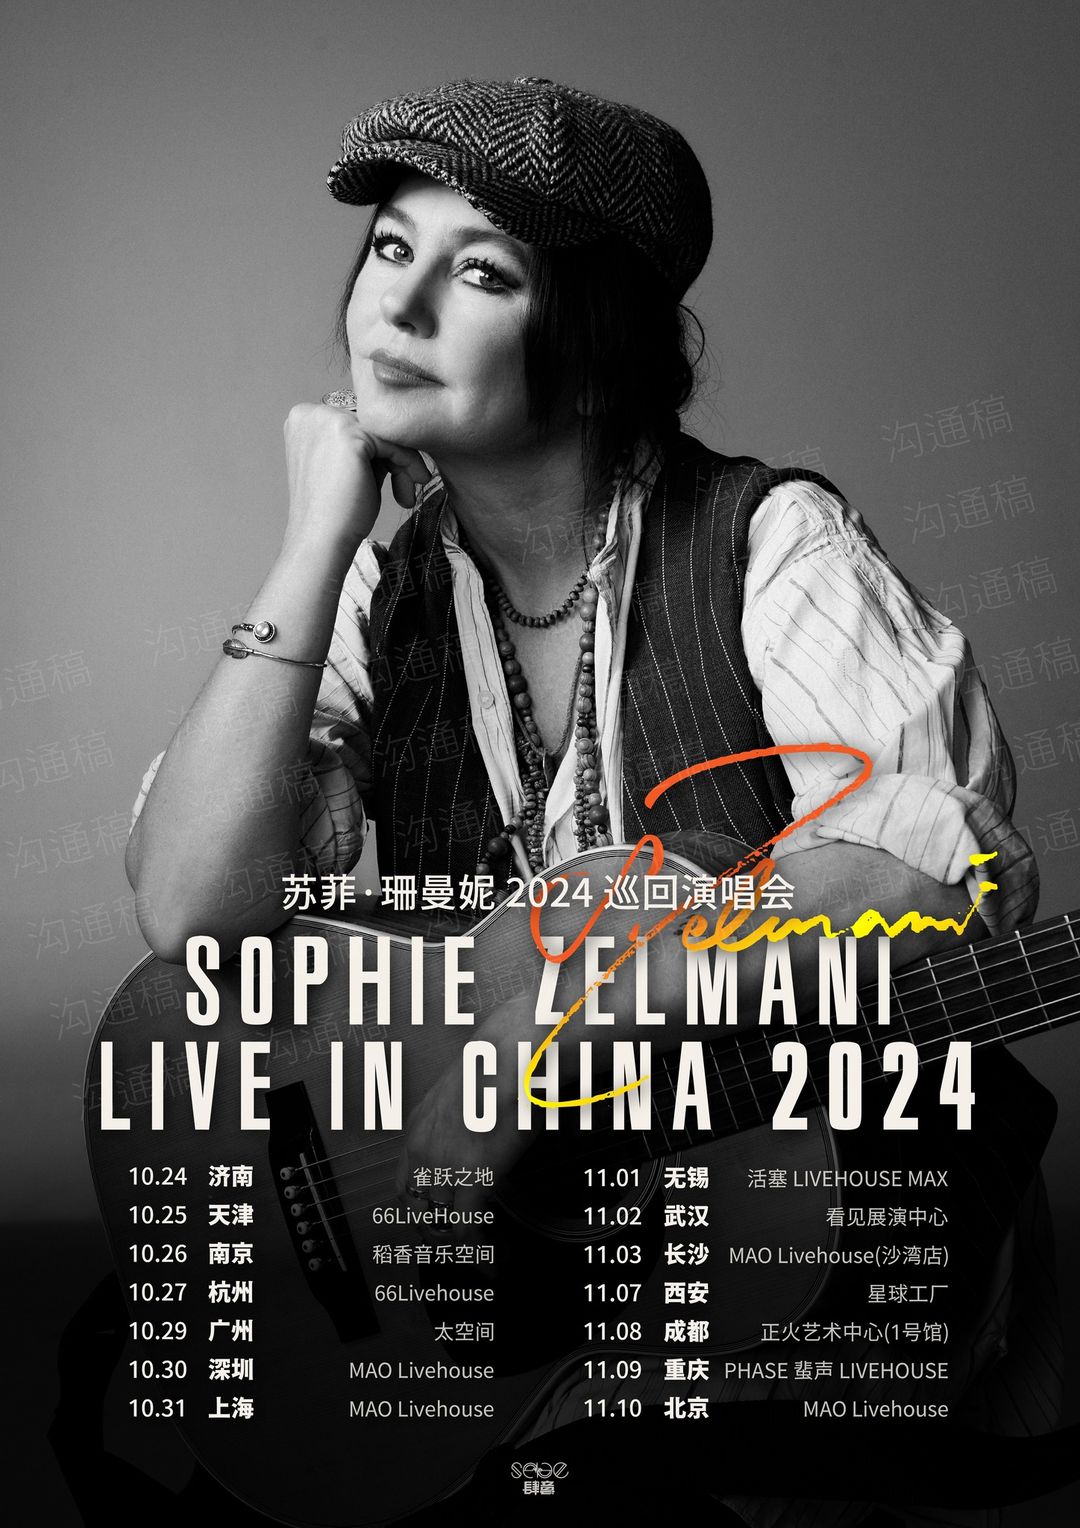 Sophie Zelmani China Tour 2024